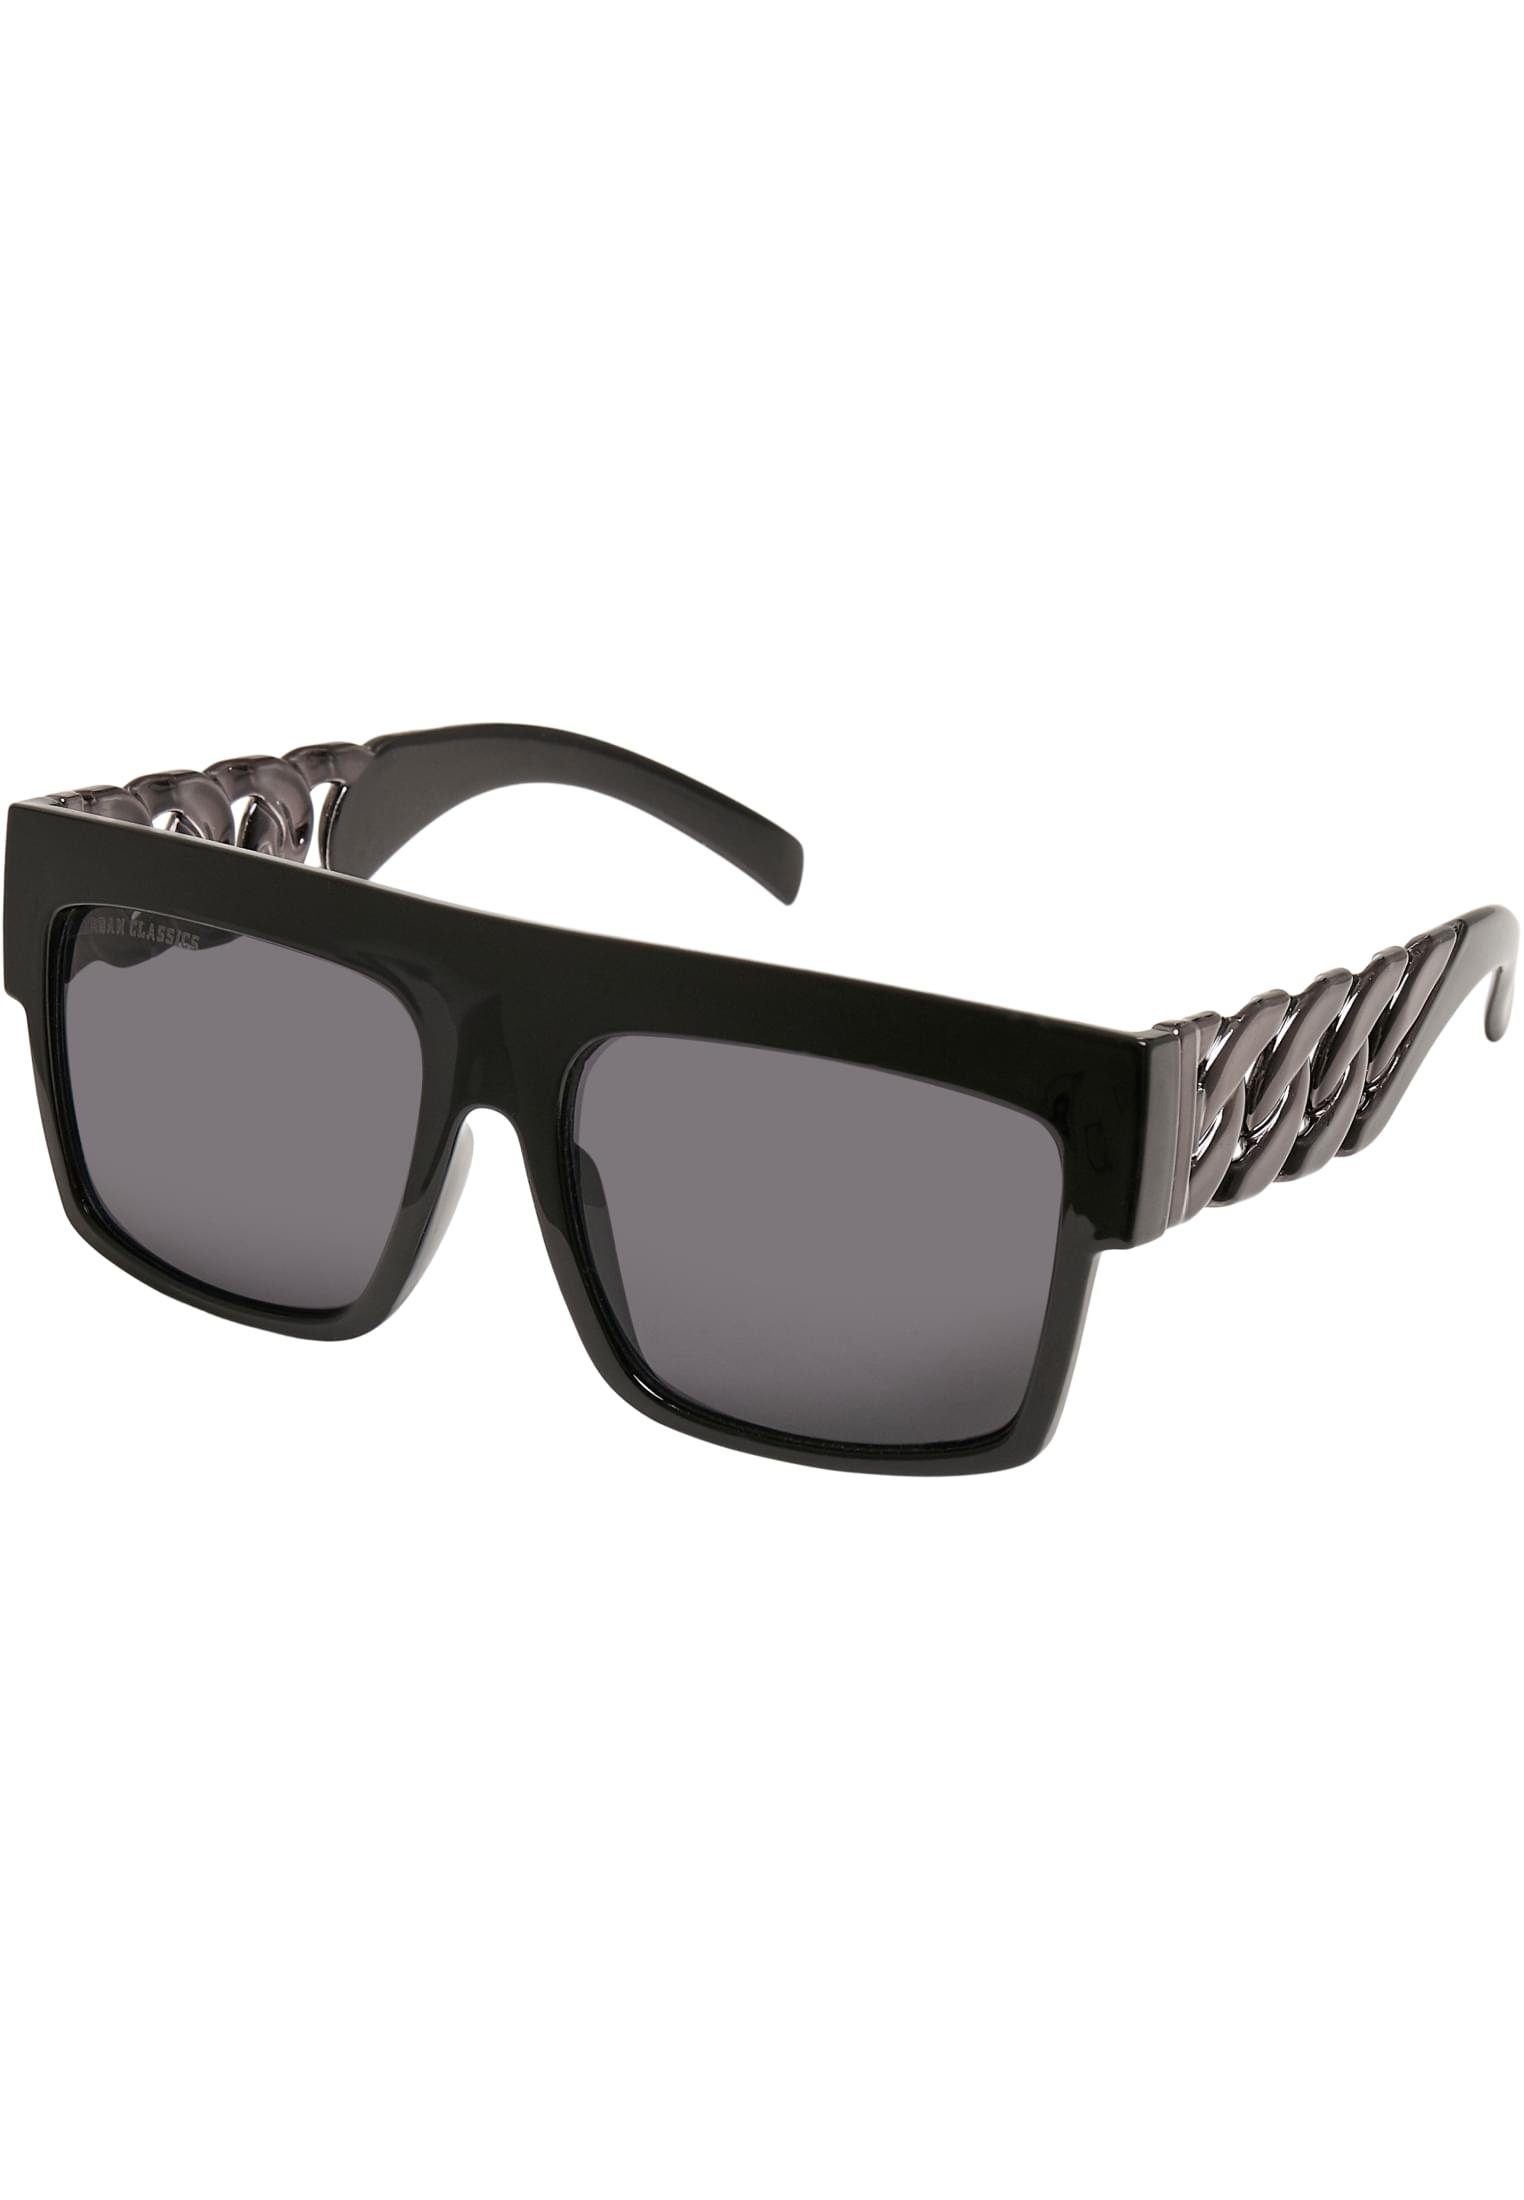 CLASSICS URBAN Chain with Sonnenbrille Zakynthos Sunglasses Accessoires black/silver